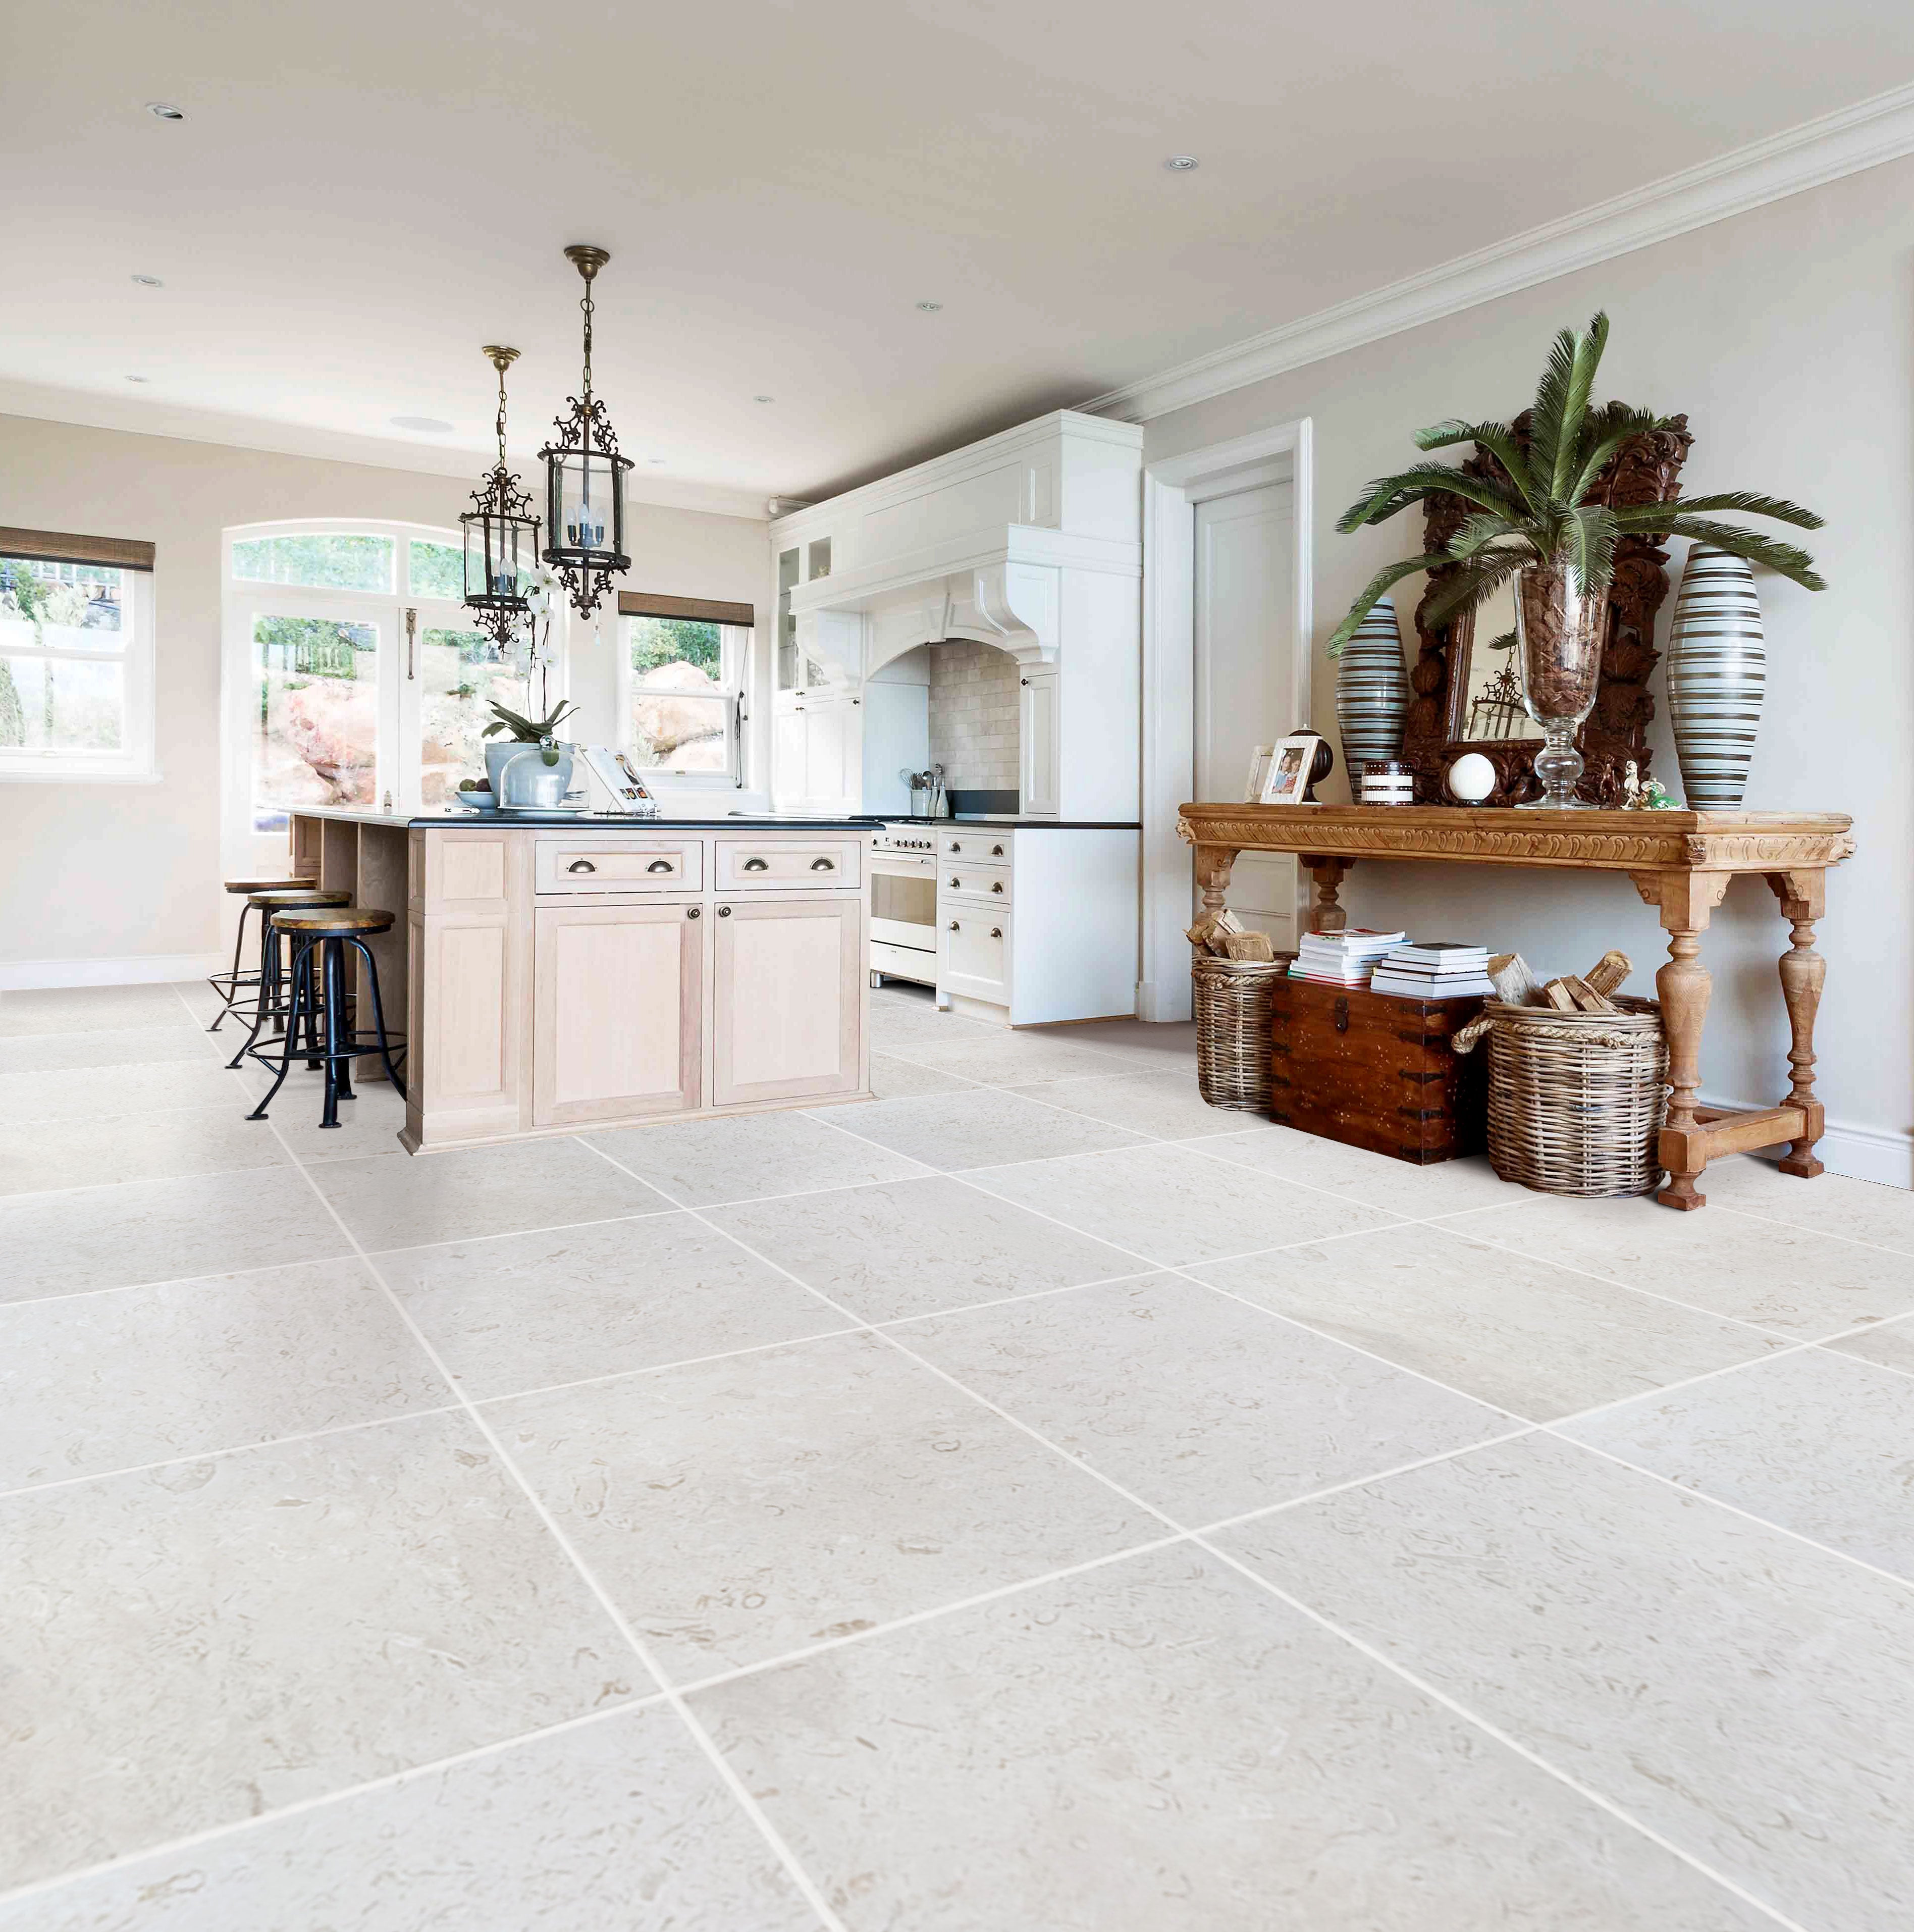 Buy Kitchen Ceramic Tile, Ceramic Tiles for Kitchen Floors and